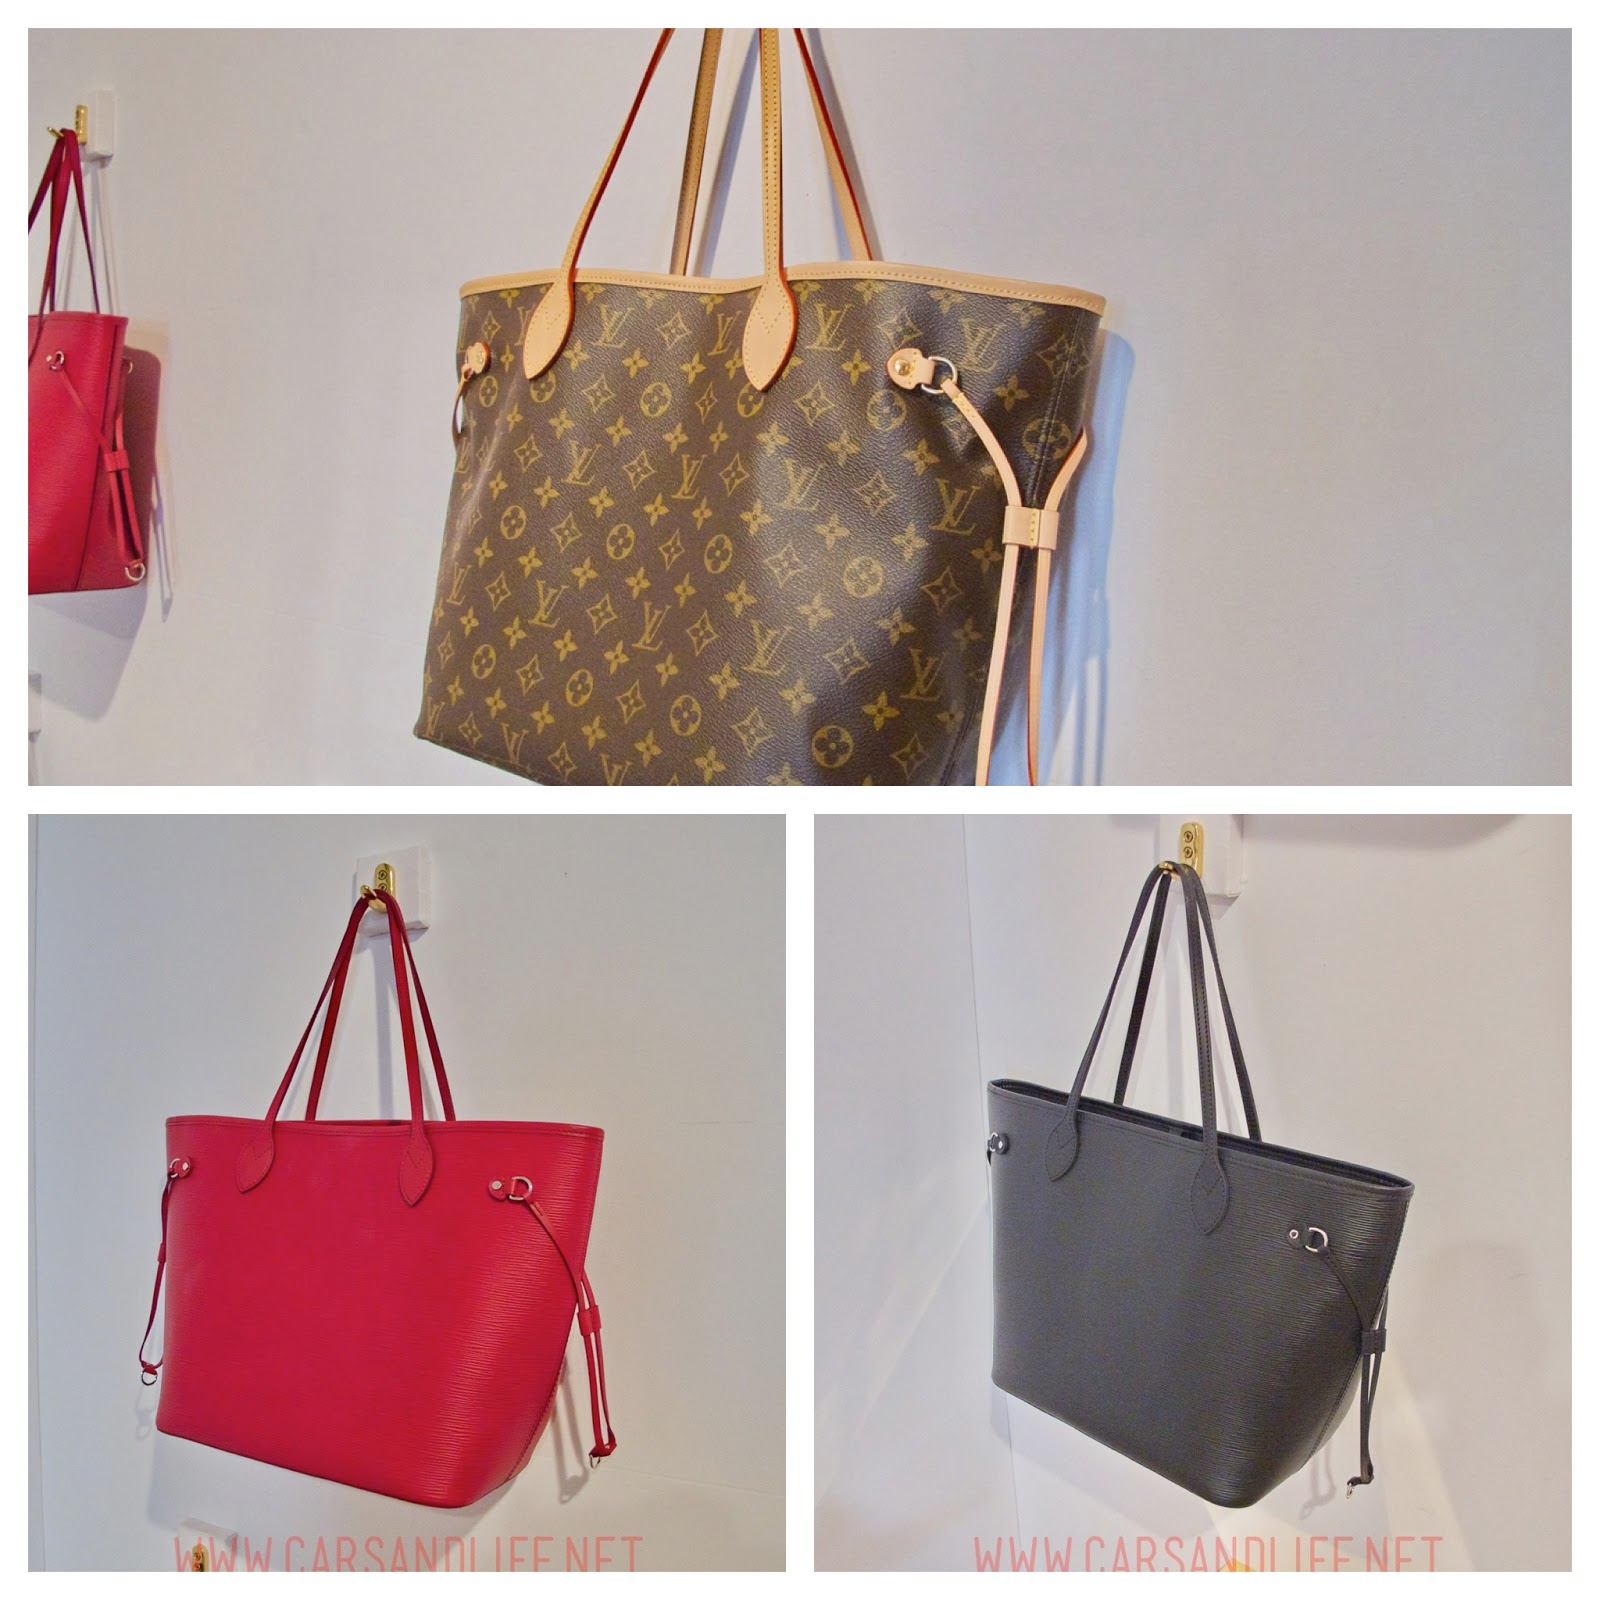 Louis Vuitton Cruise 2014 Handbag Collection - cars & life blog | cars fashion lifestyle